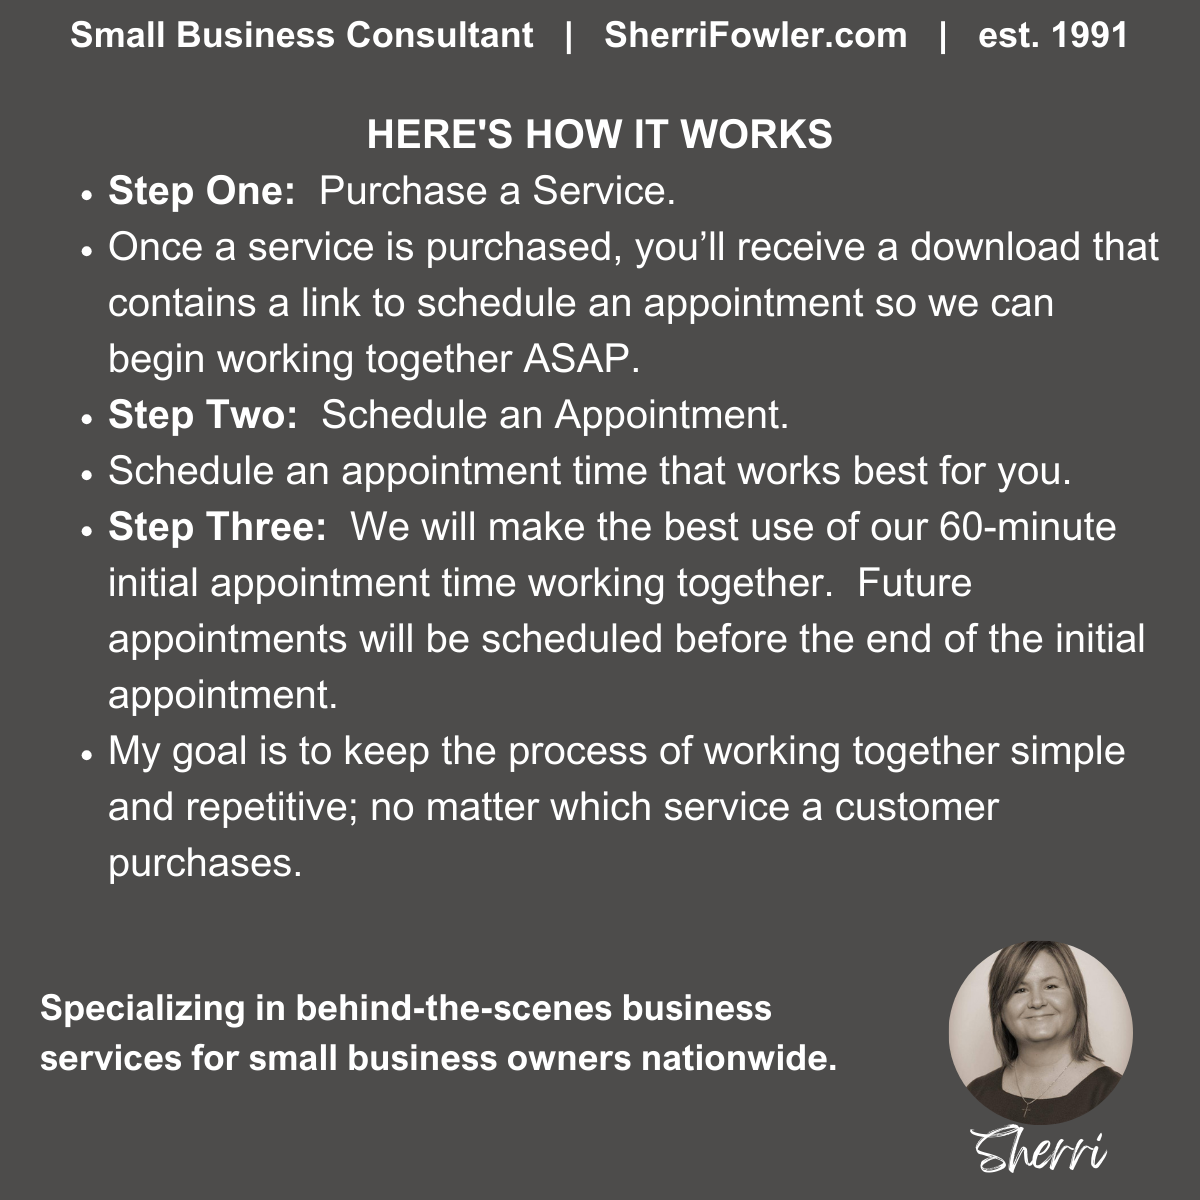 Sherri Smith provides business services to real estate investors through SherriFowler.com